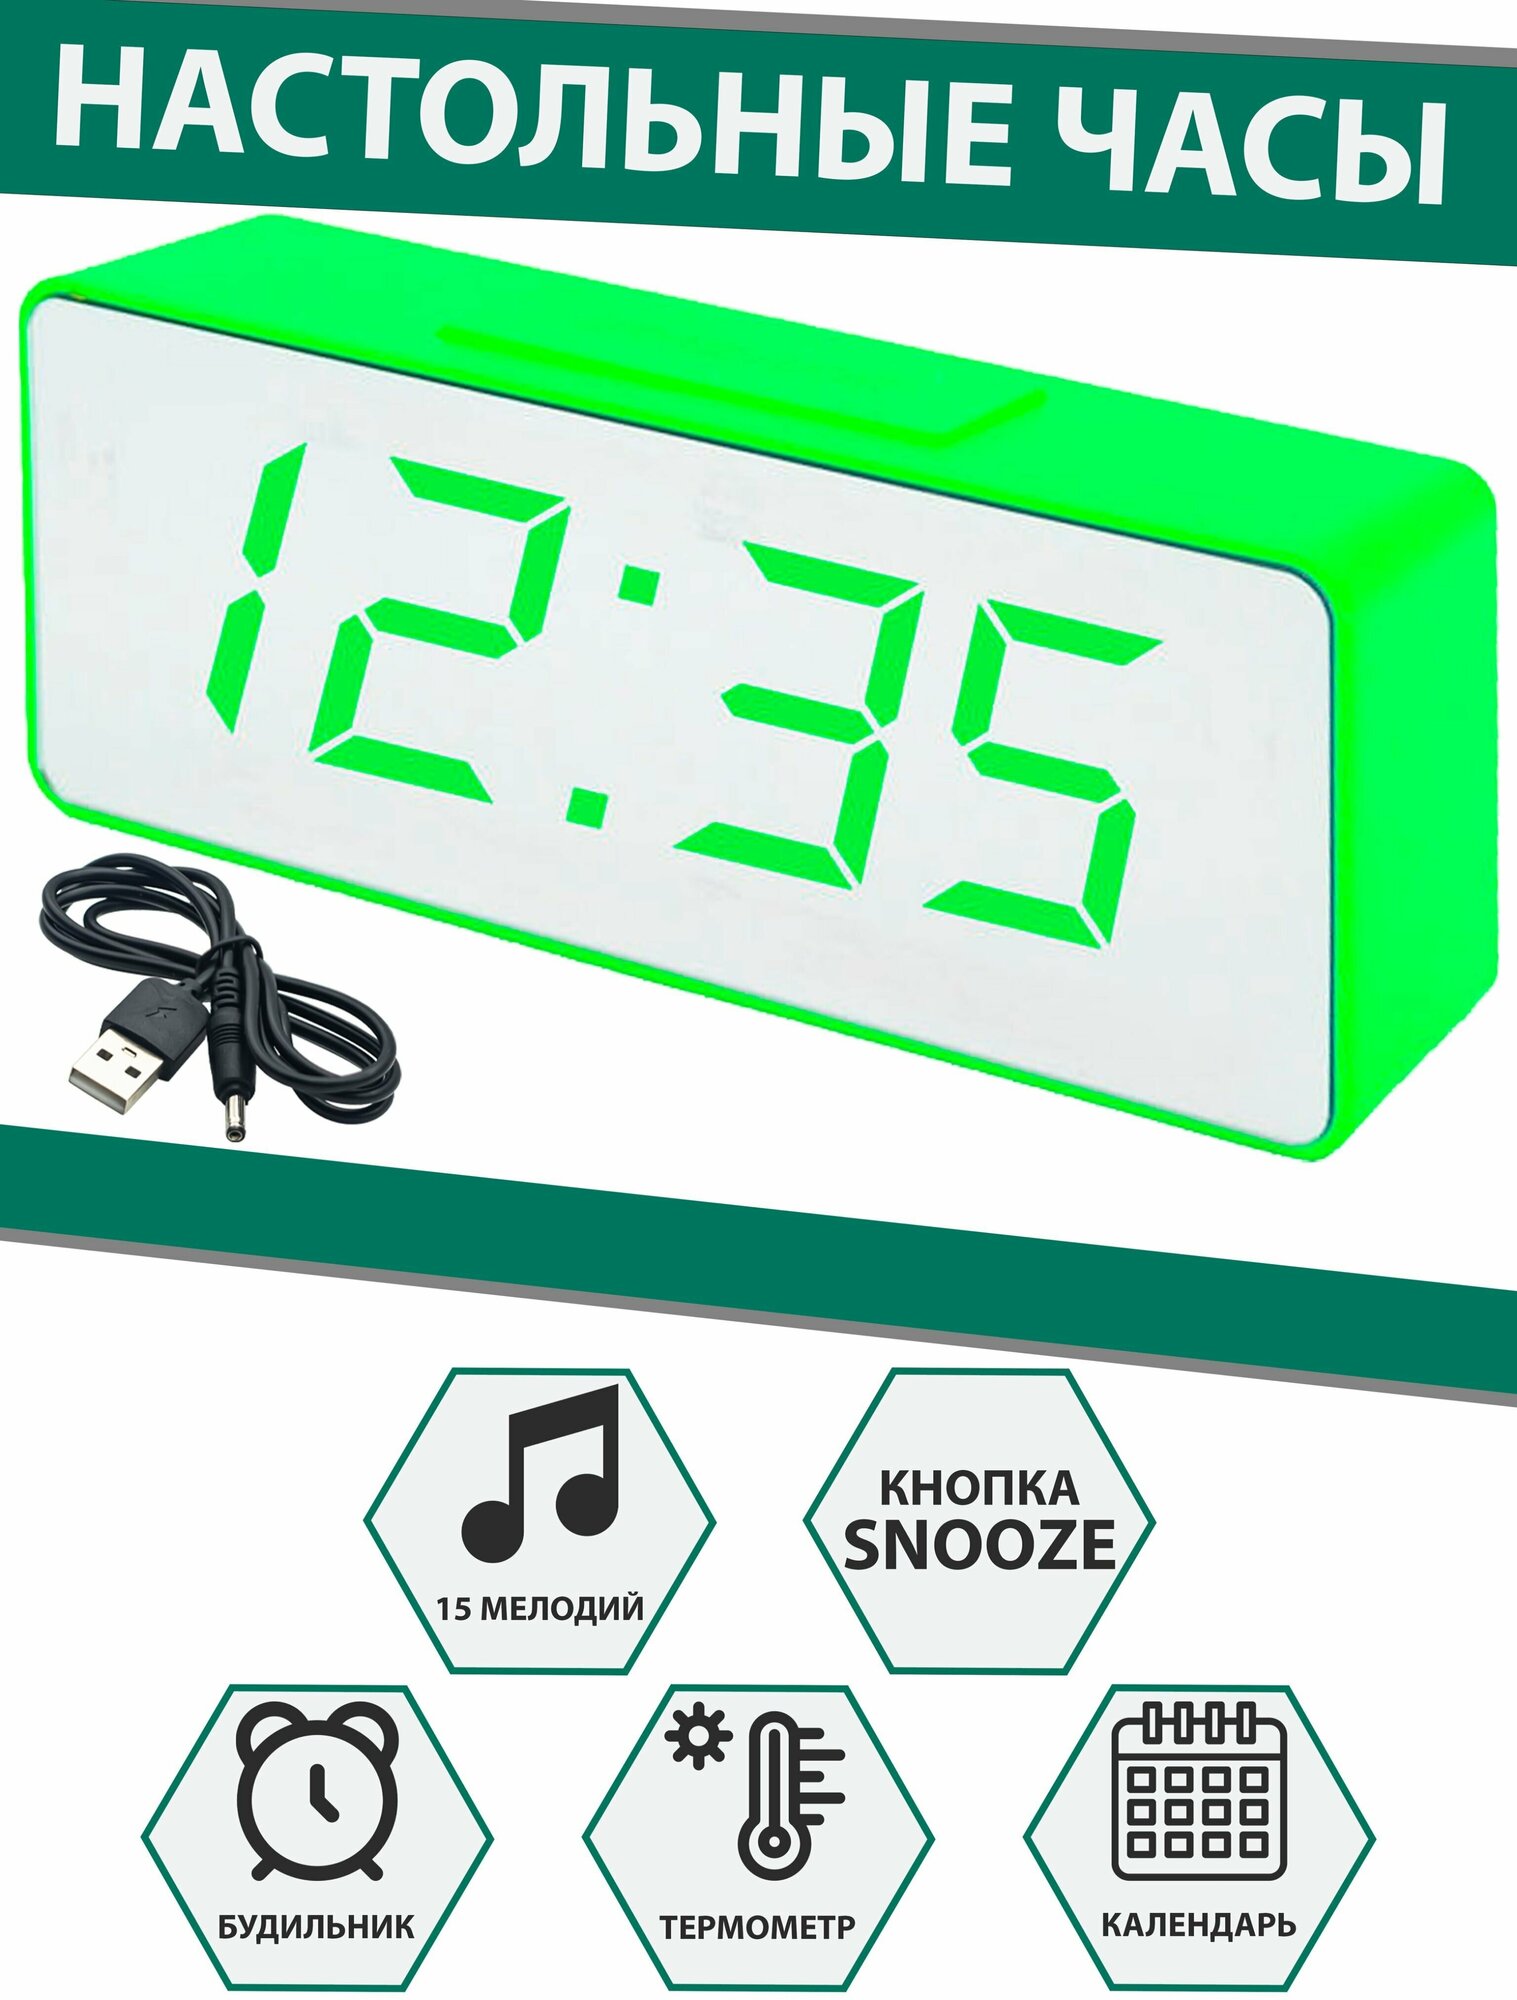 Настольные электронные часы - будильник VST886Y-зеленый